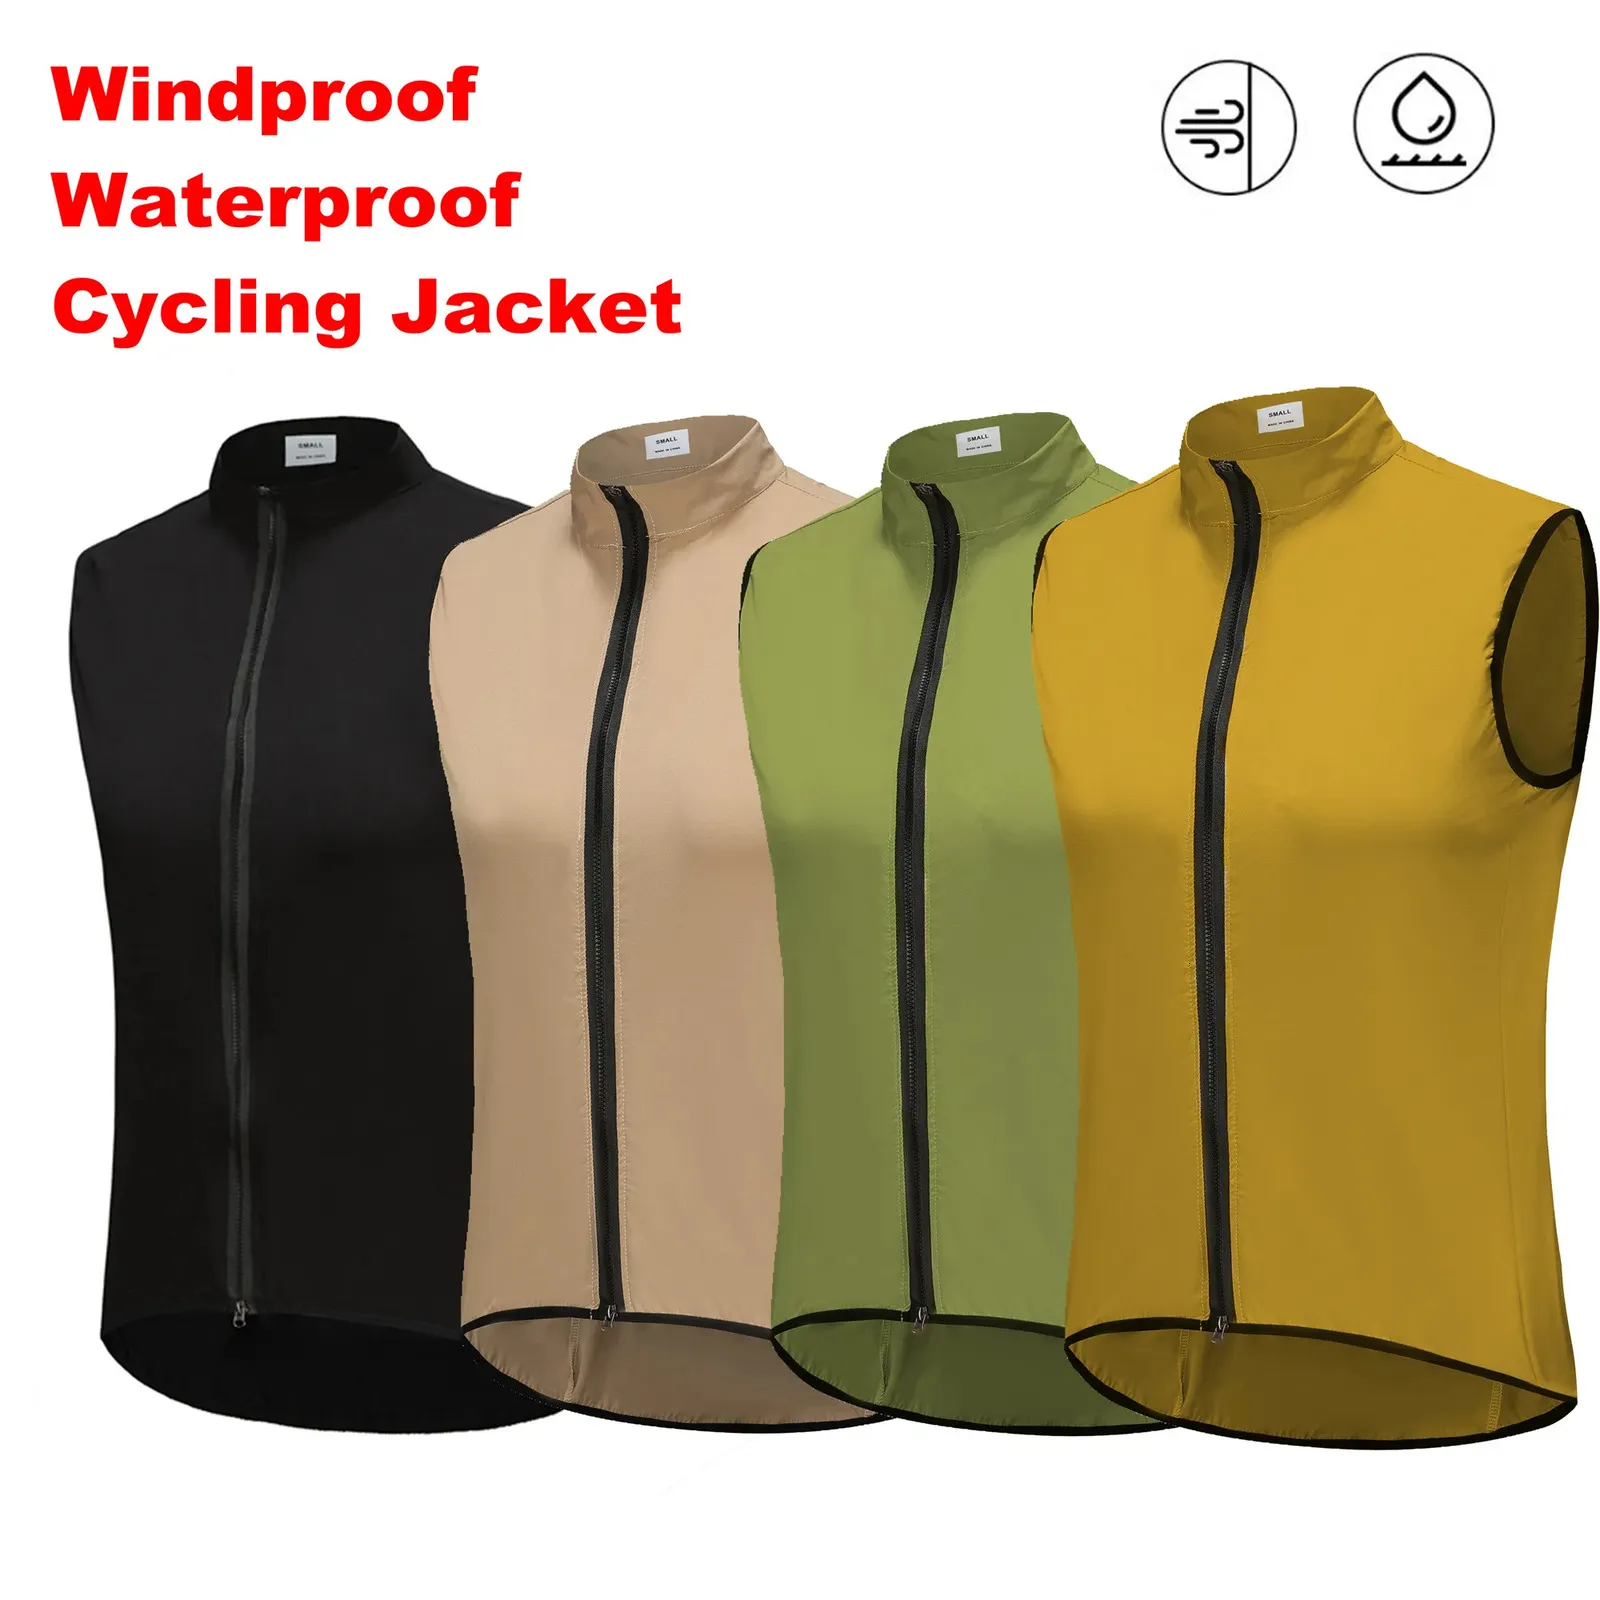 Cycling Jackets Spexcell Rsantce Men Women Windproof Waterproof Sleeveless Cycling Jacket - Lightweight Bike Vest Jerseys Bicycle Clothing 231120